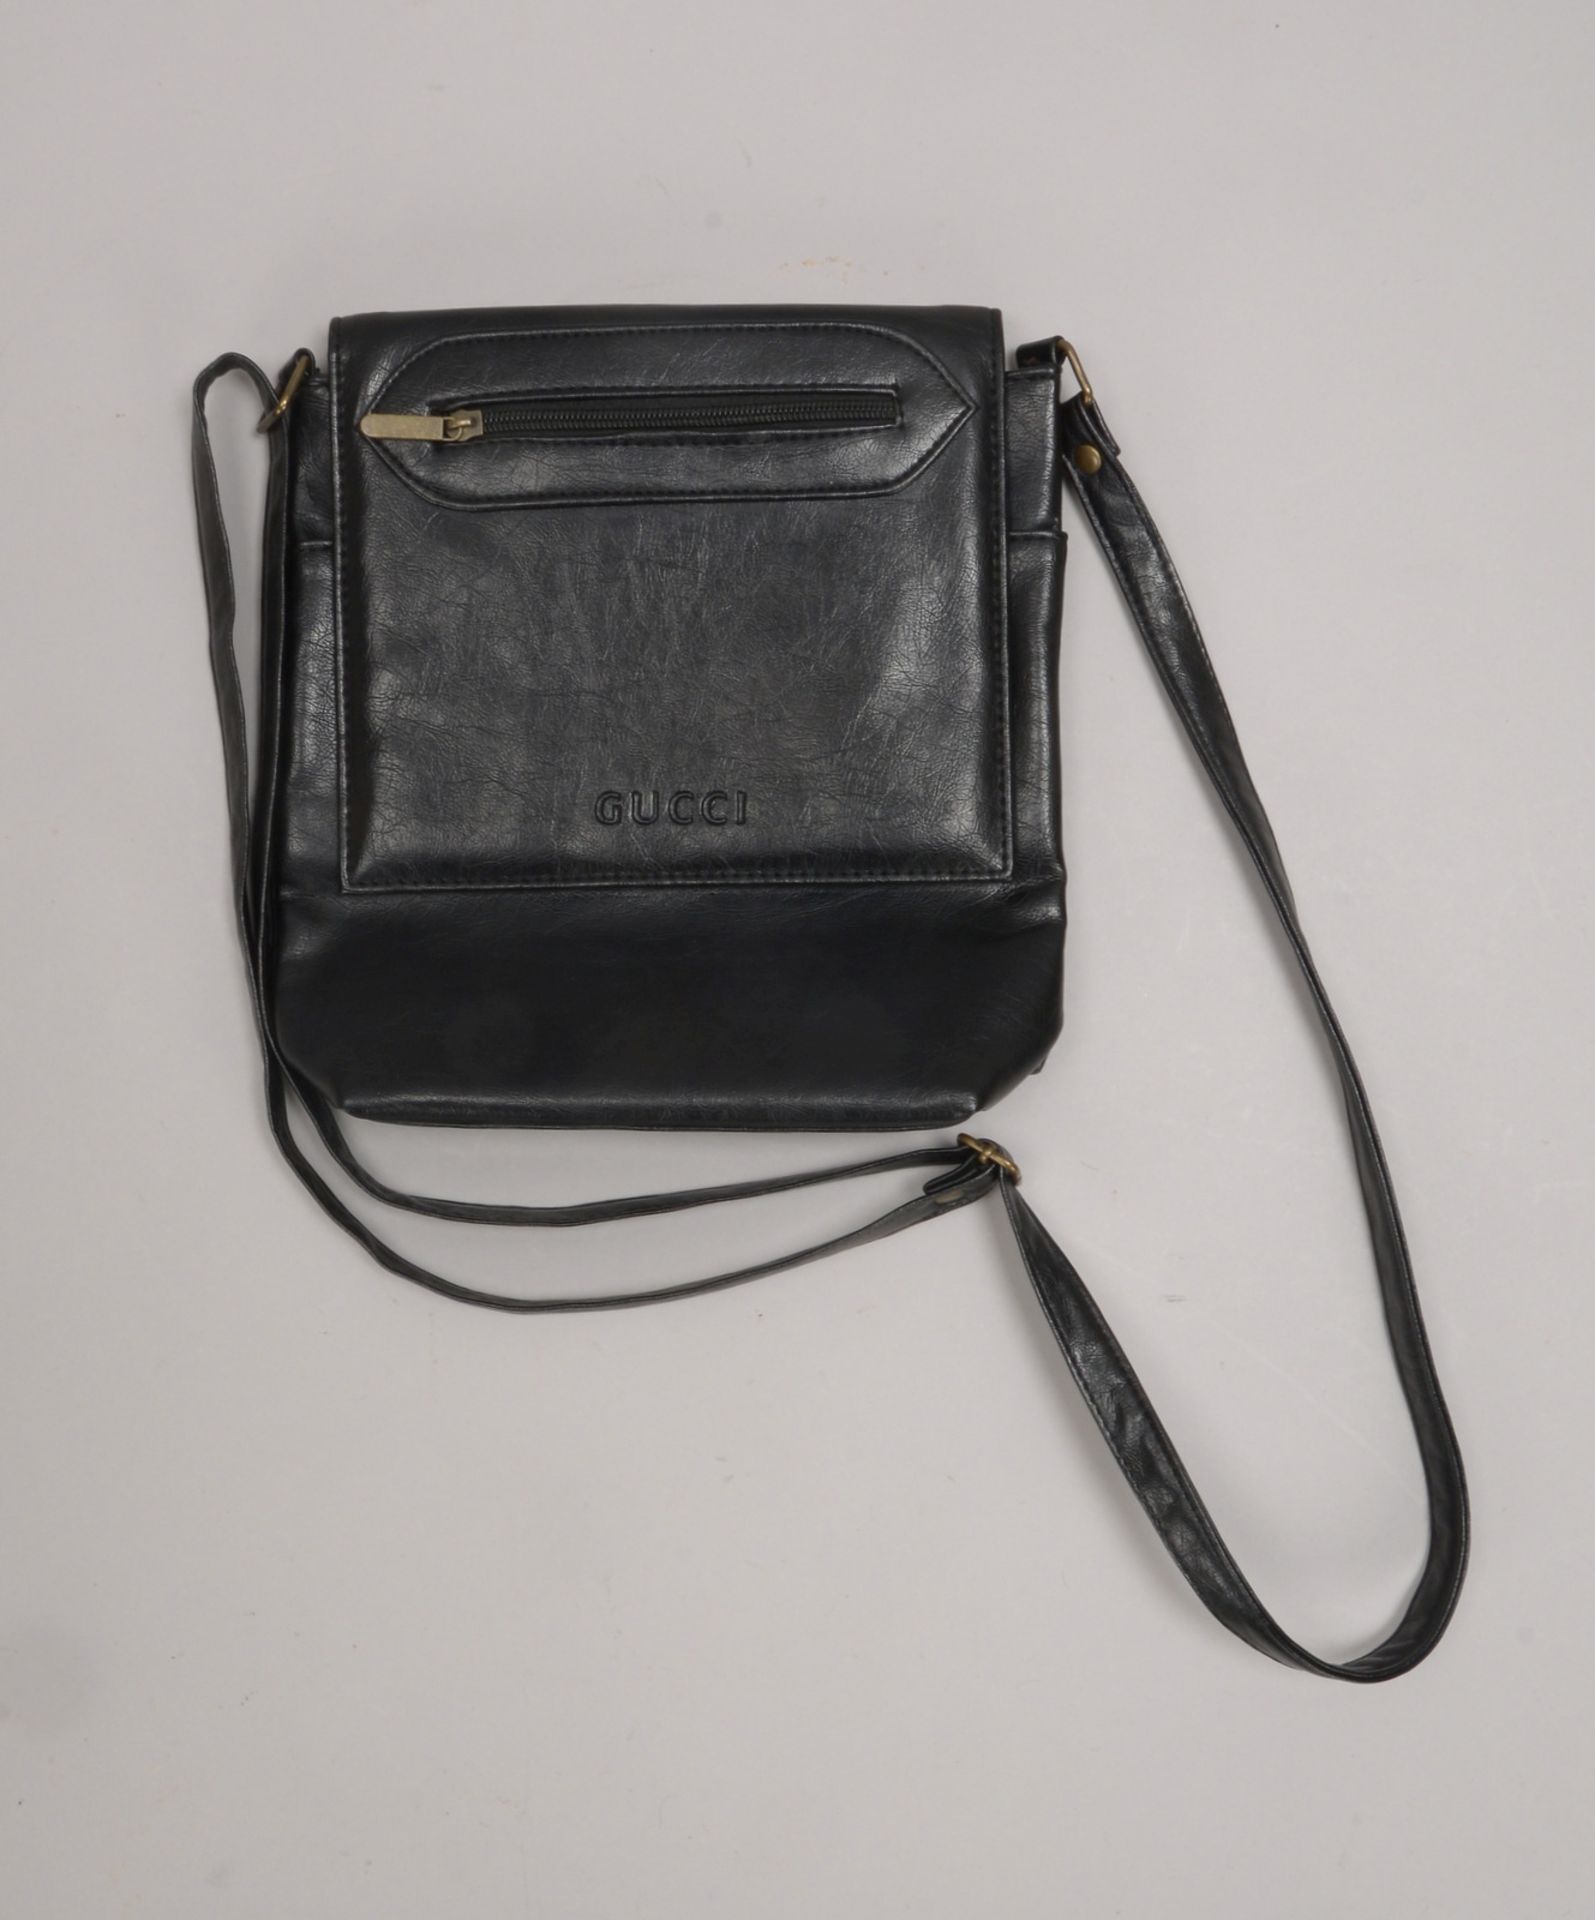 Gucci, Damenhandtasche/Theatertasche, schwarzes Echtleder, gepflegter Zustand